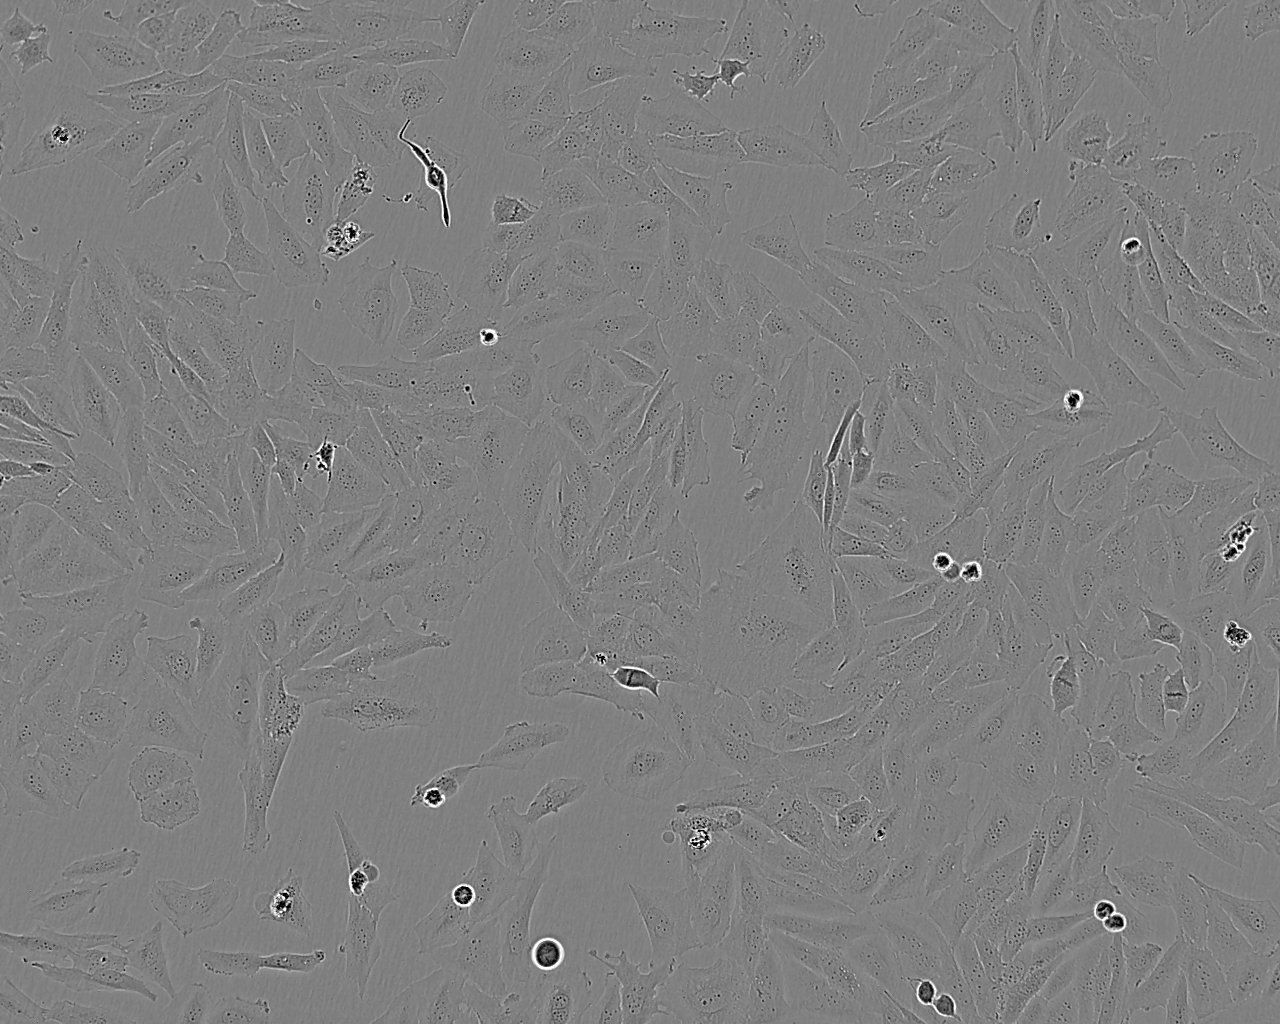 NCI-H1581 Cells|人非小细胞肺癌细胞系,NCI-H1581 Cells